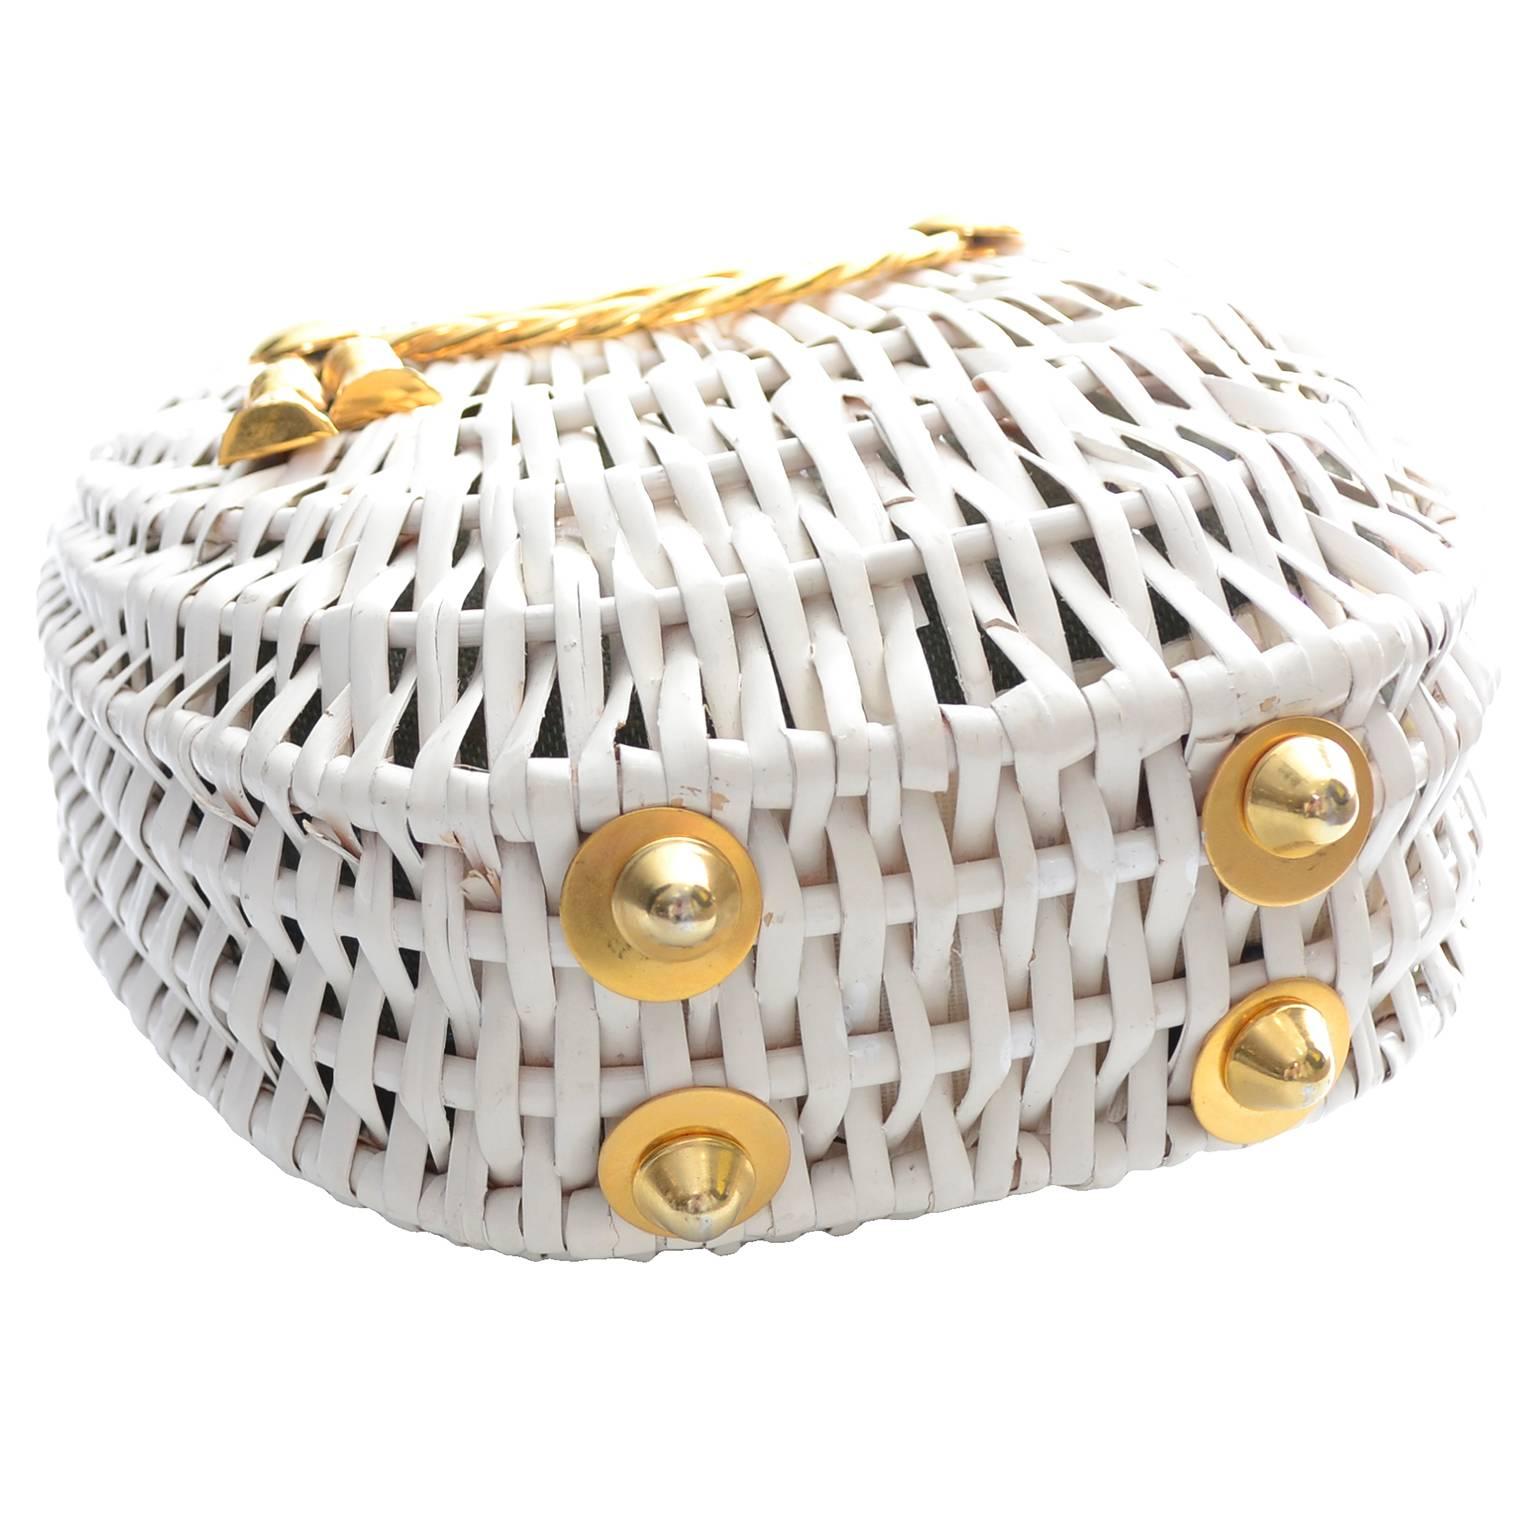 Women's Koret Vintage Handbag White Straw Built in Coin Purse 1960's Summer Bag